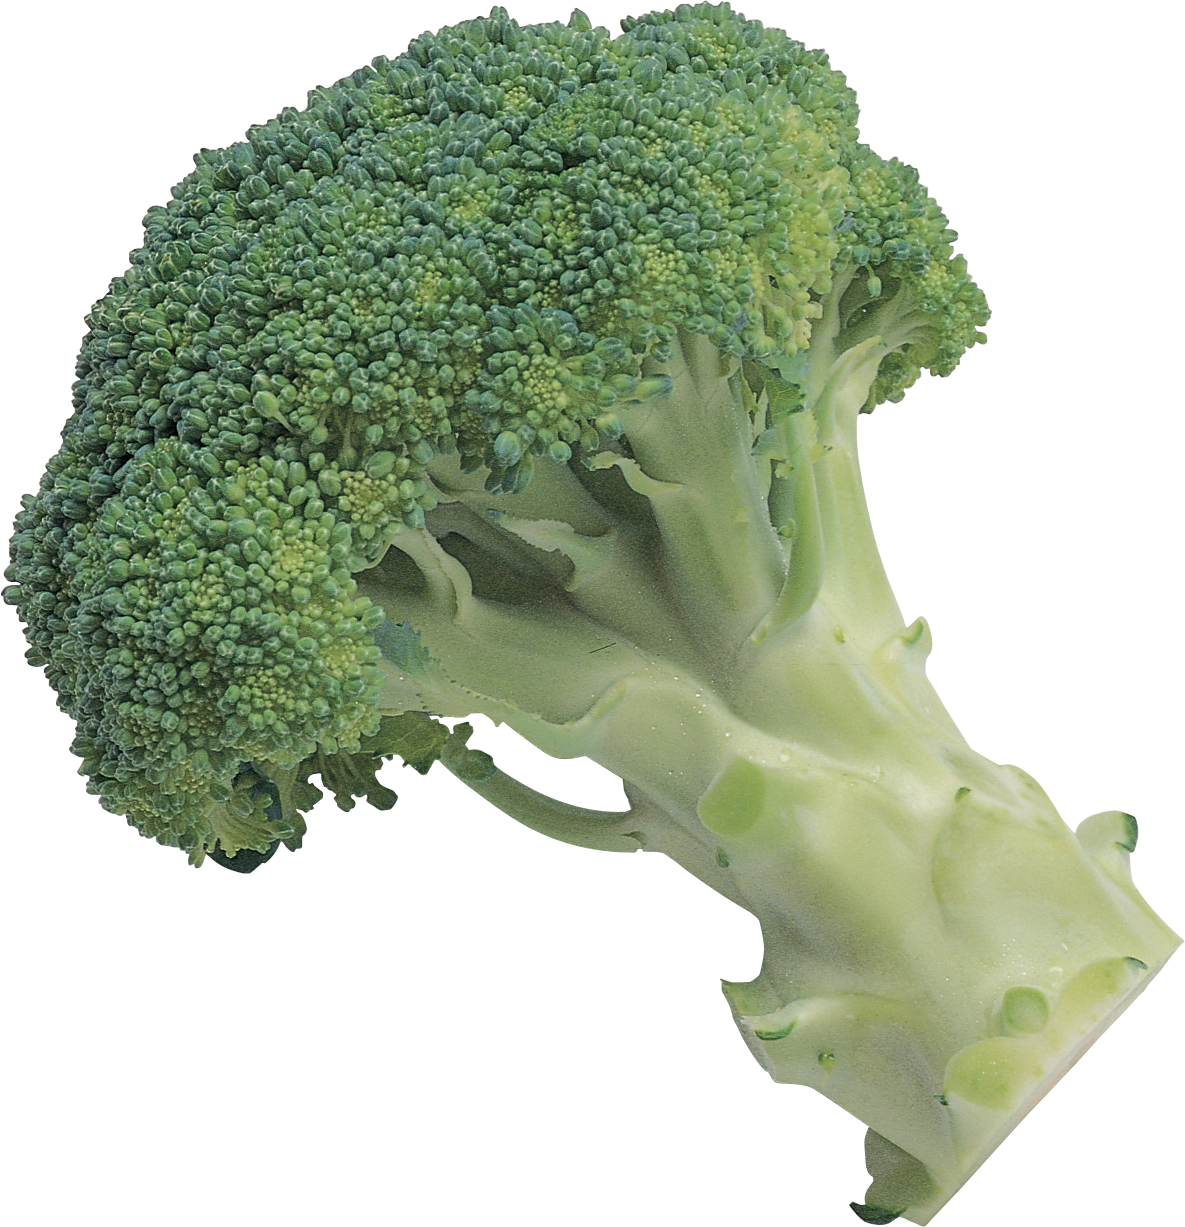 Broccoli Transparent Image